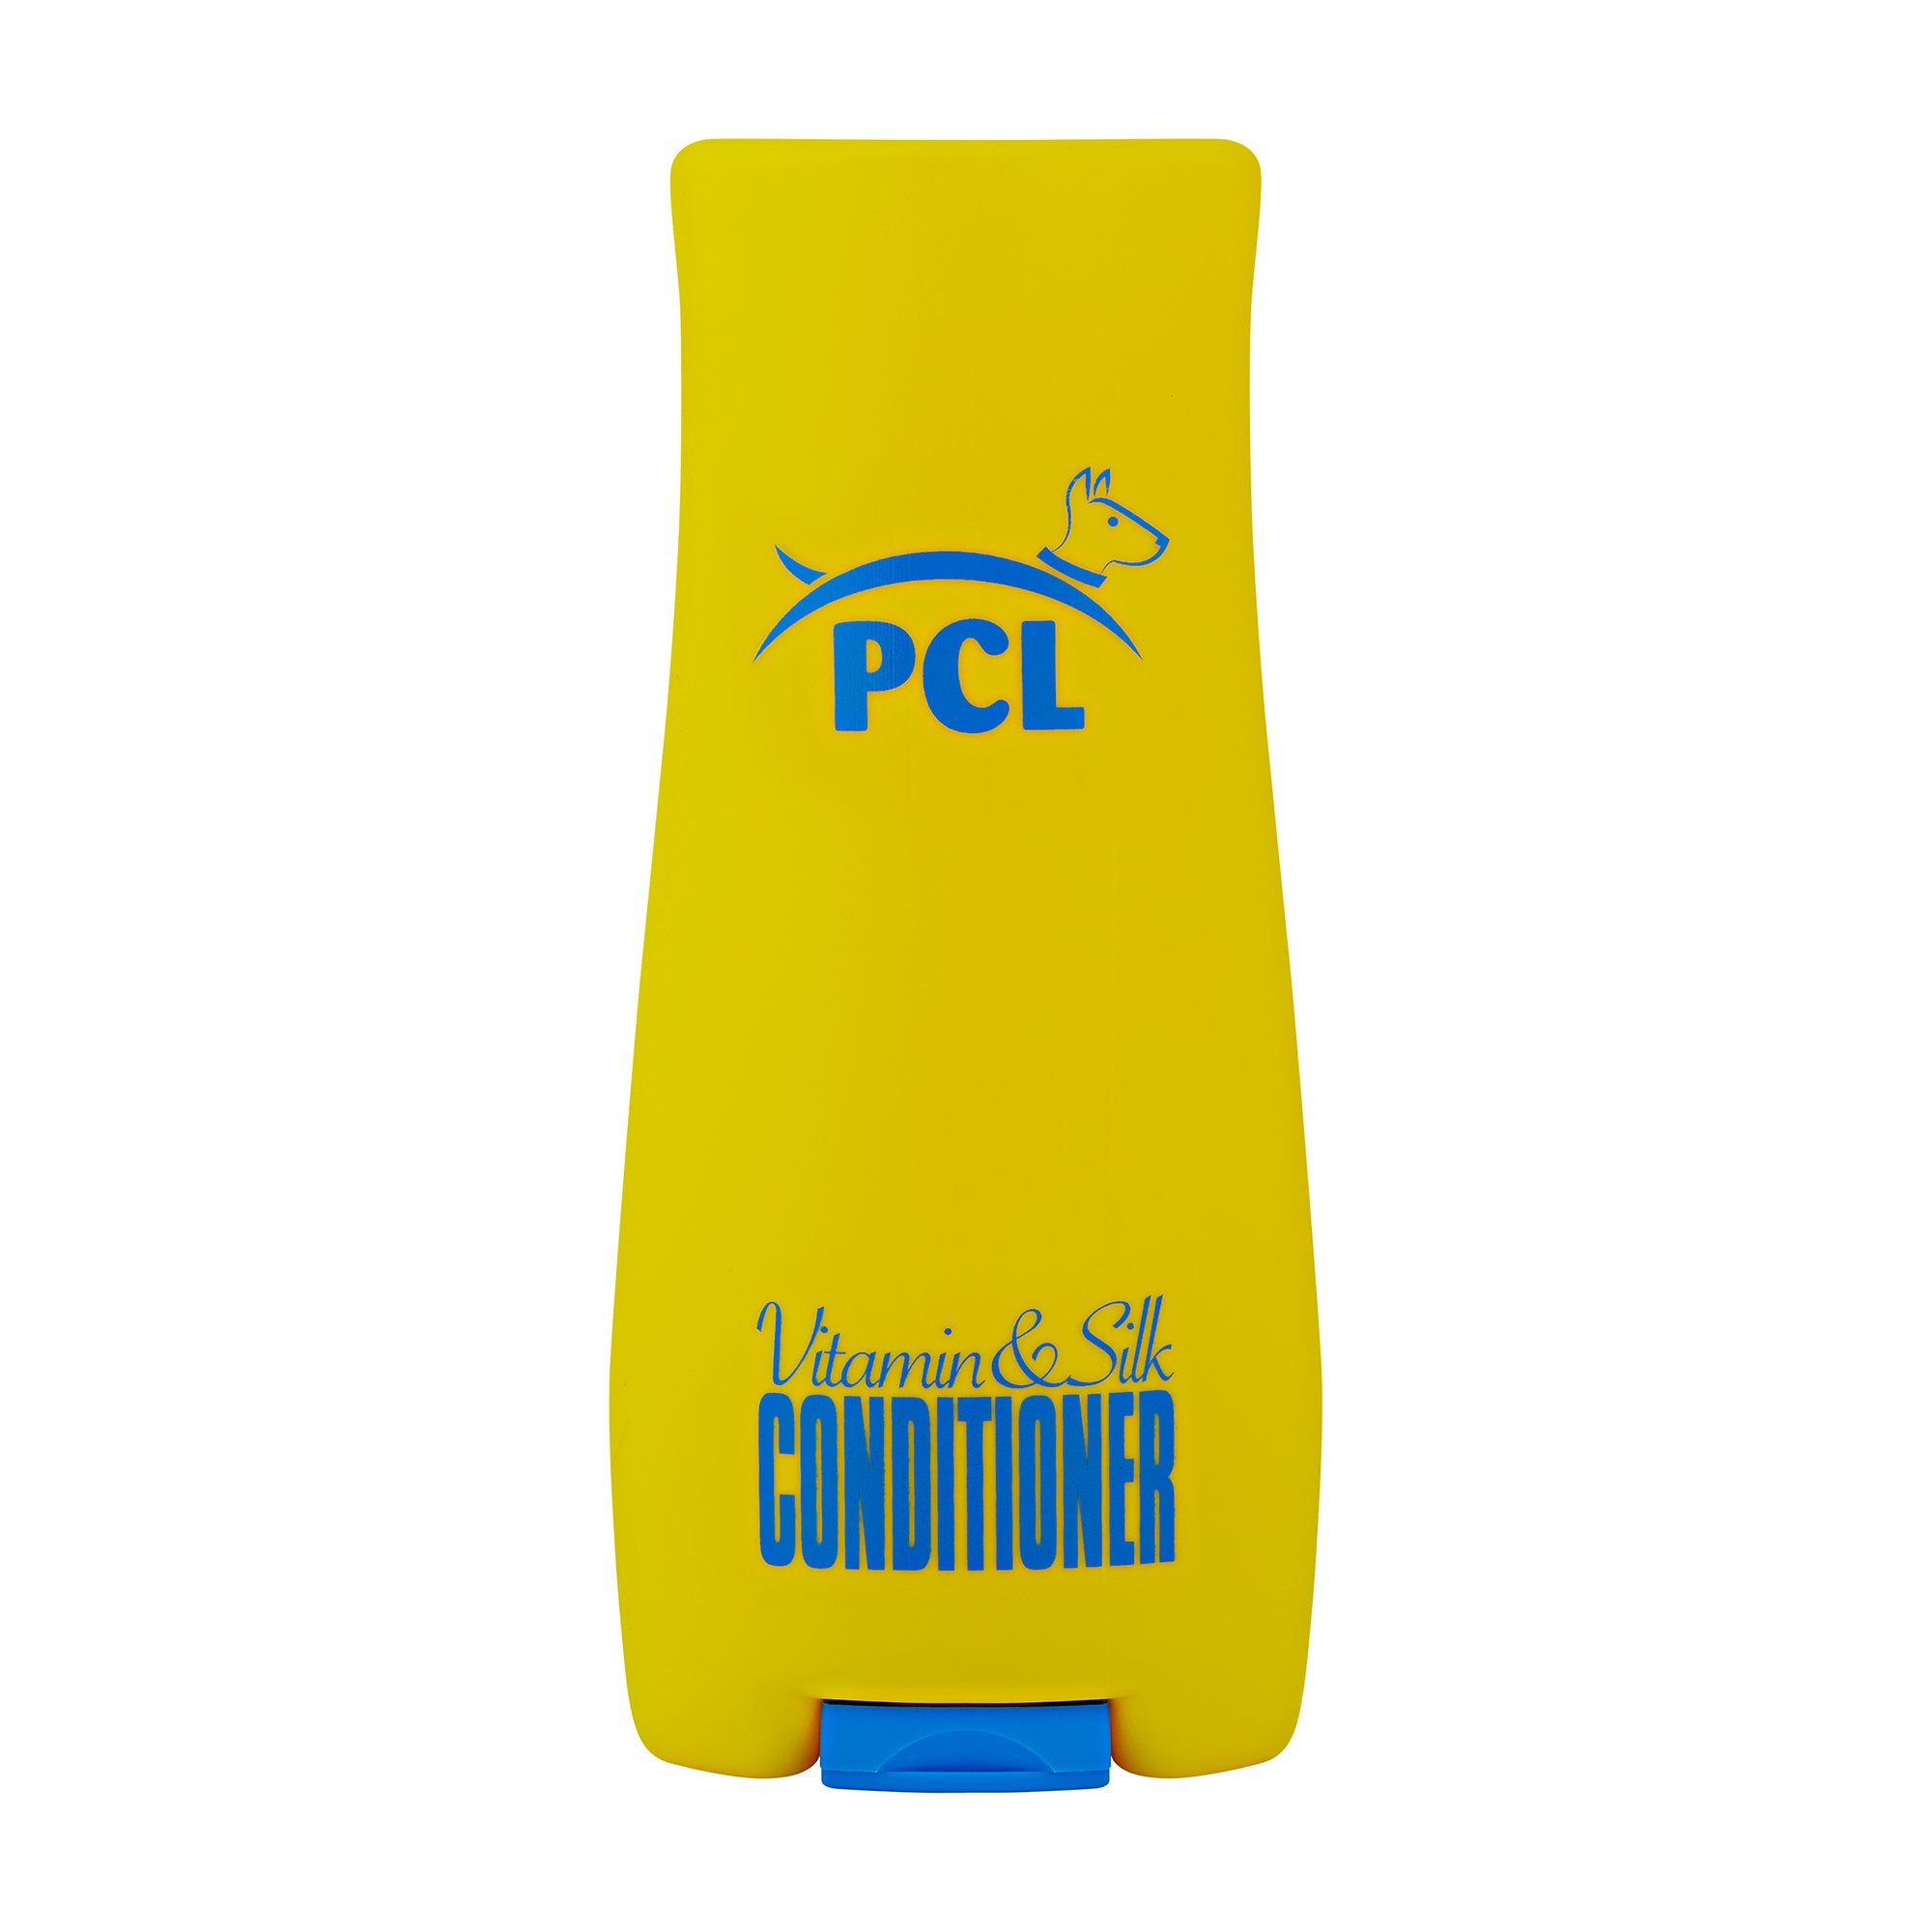 PCL Conditioner Vitamin & Silk - K9 Competition